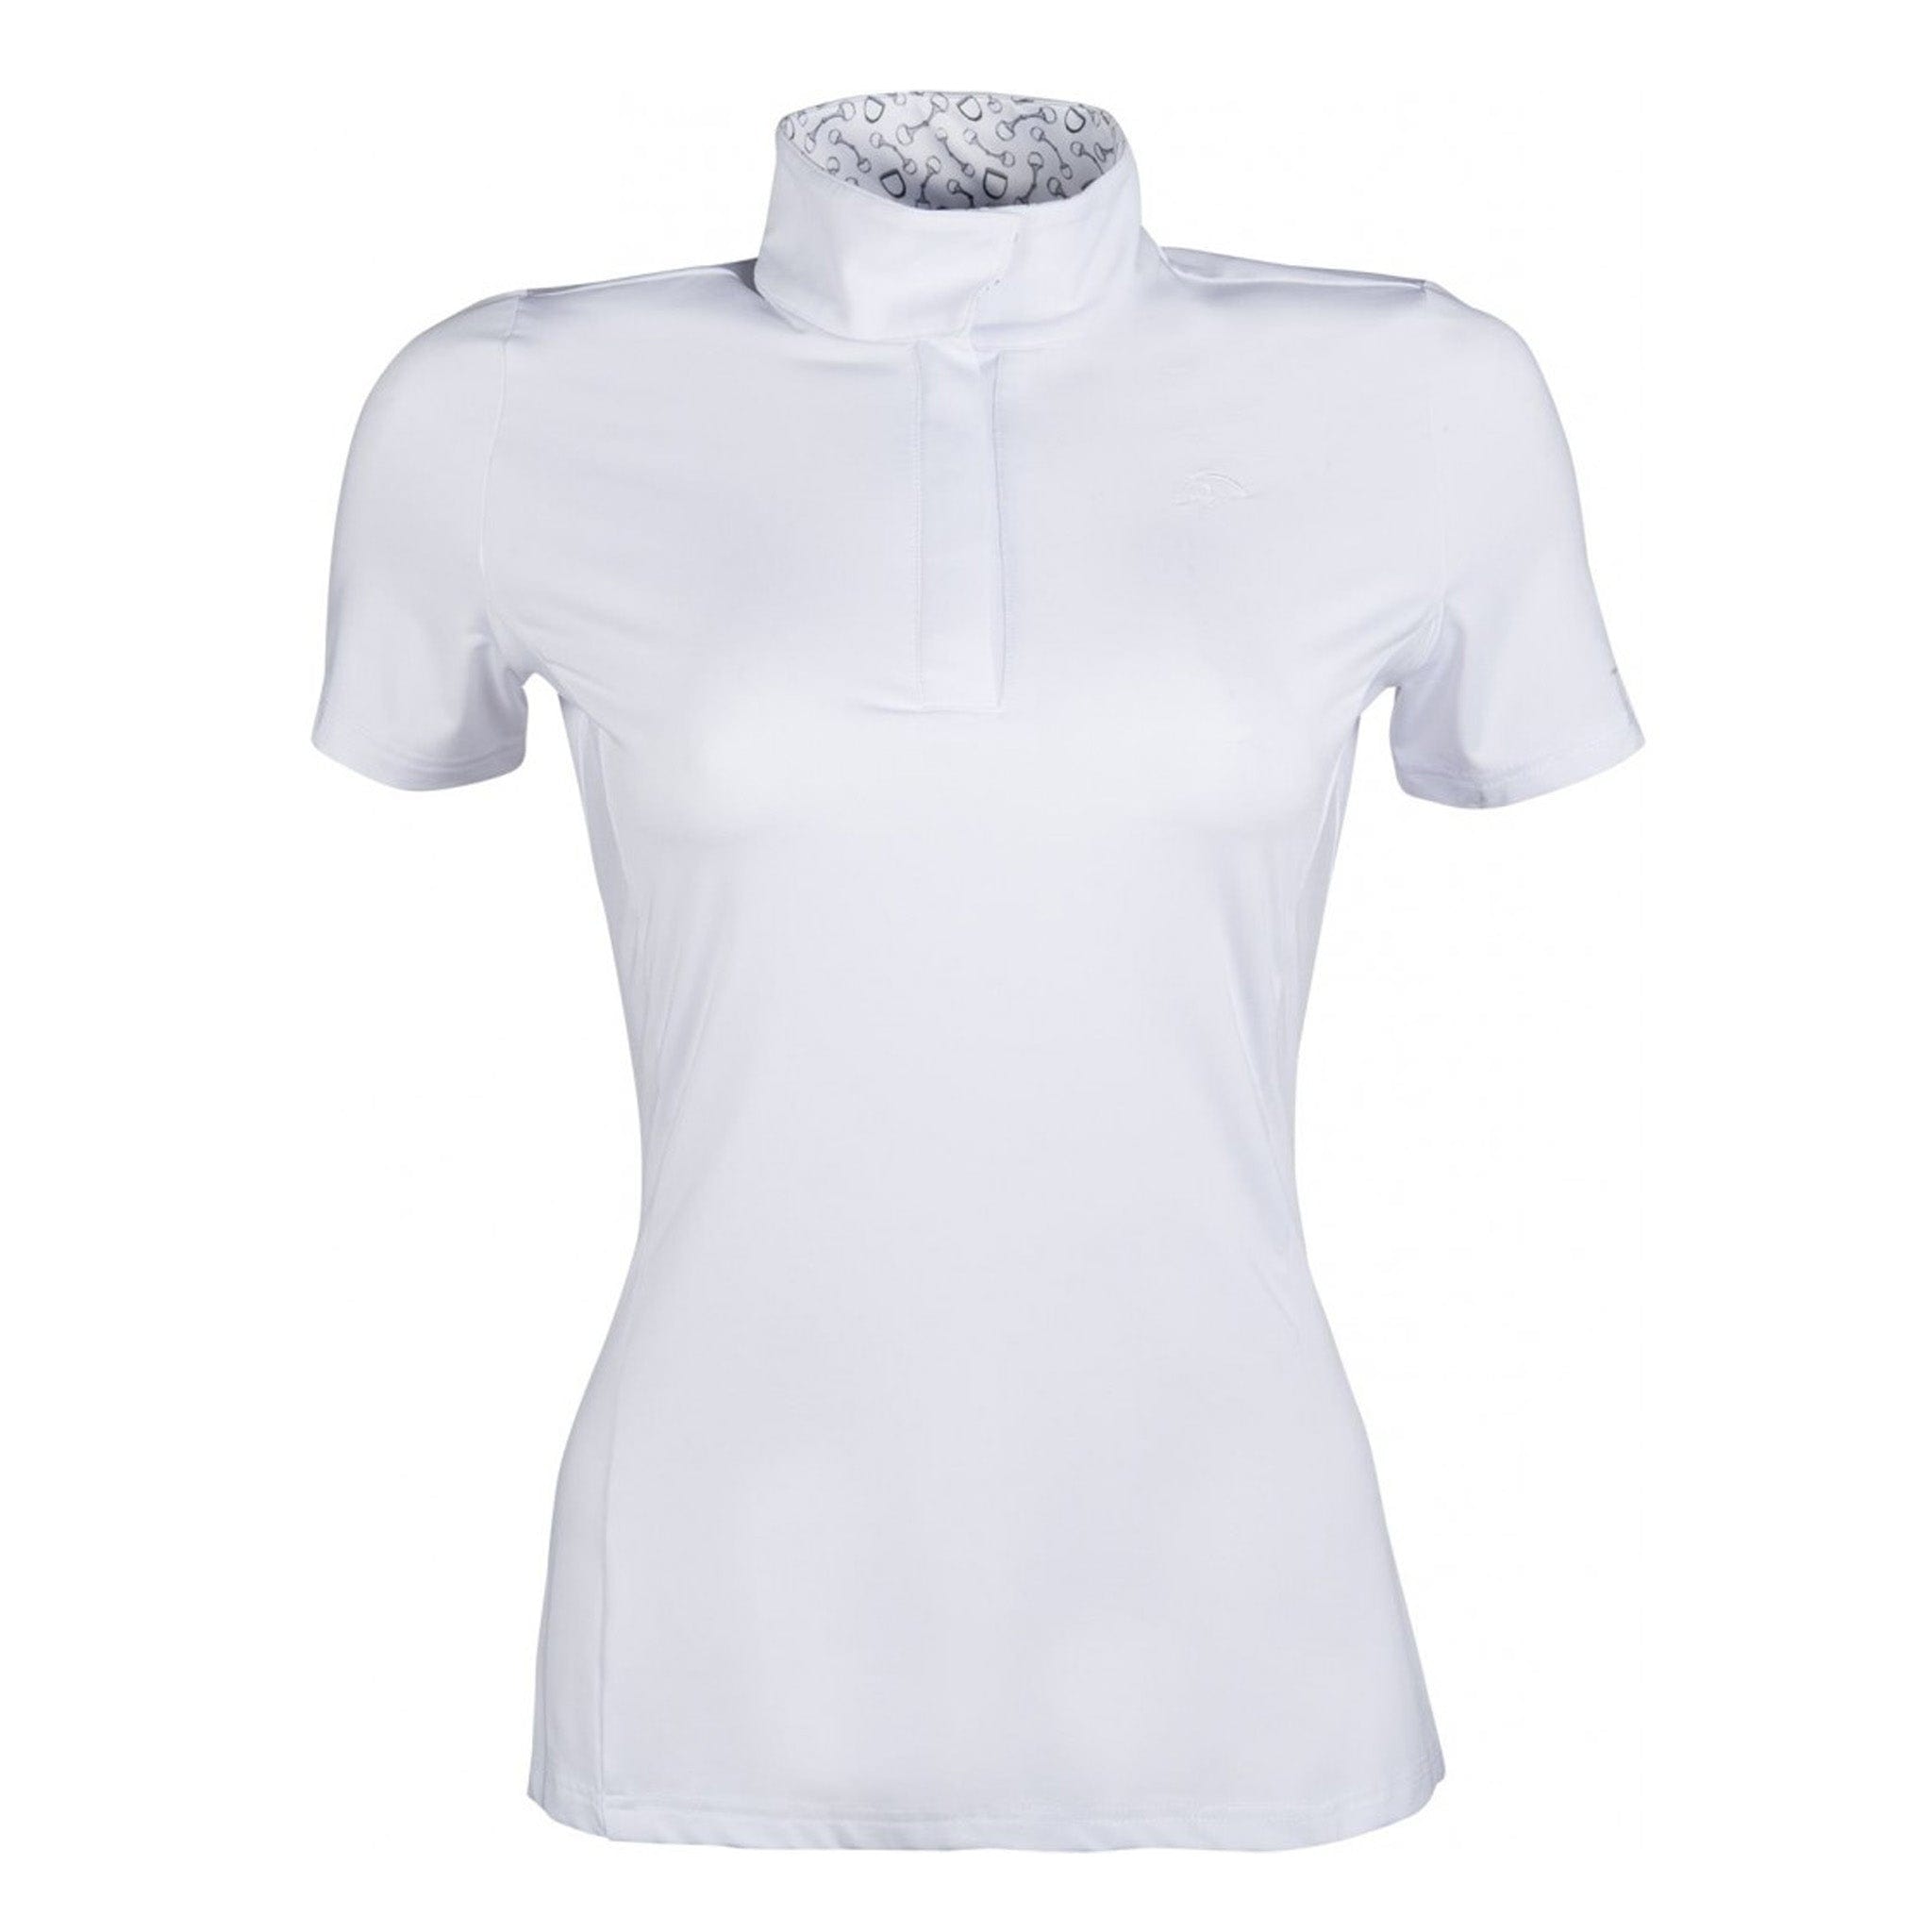 HKM Hunter Short Sleeve Show Shirt 12414 White Front View